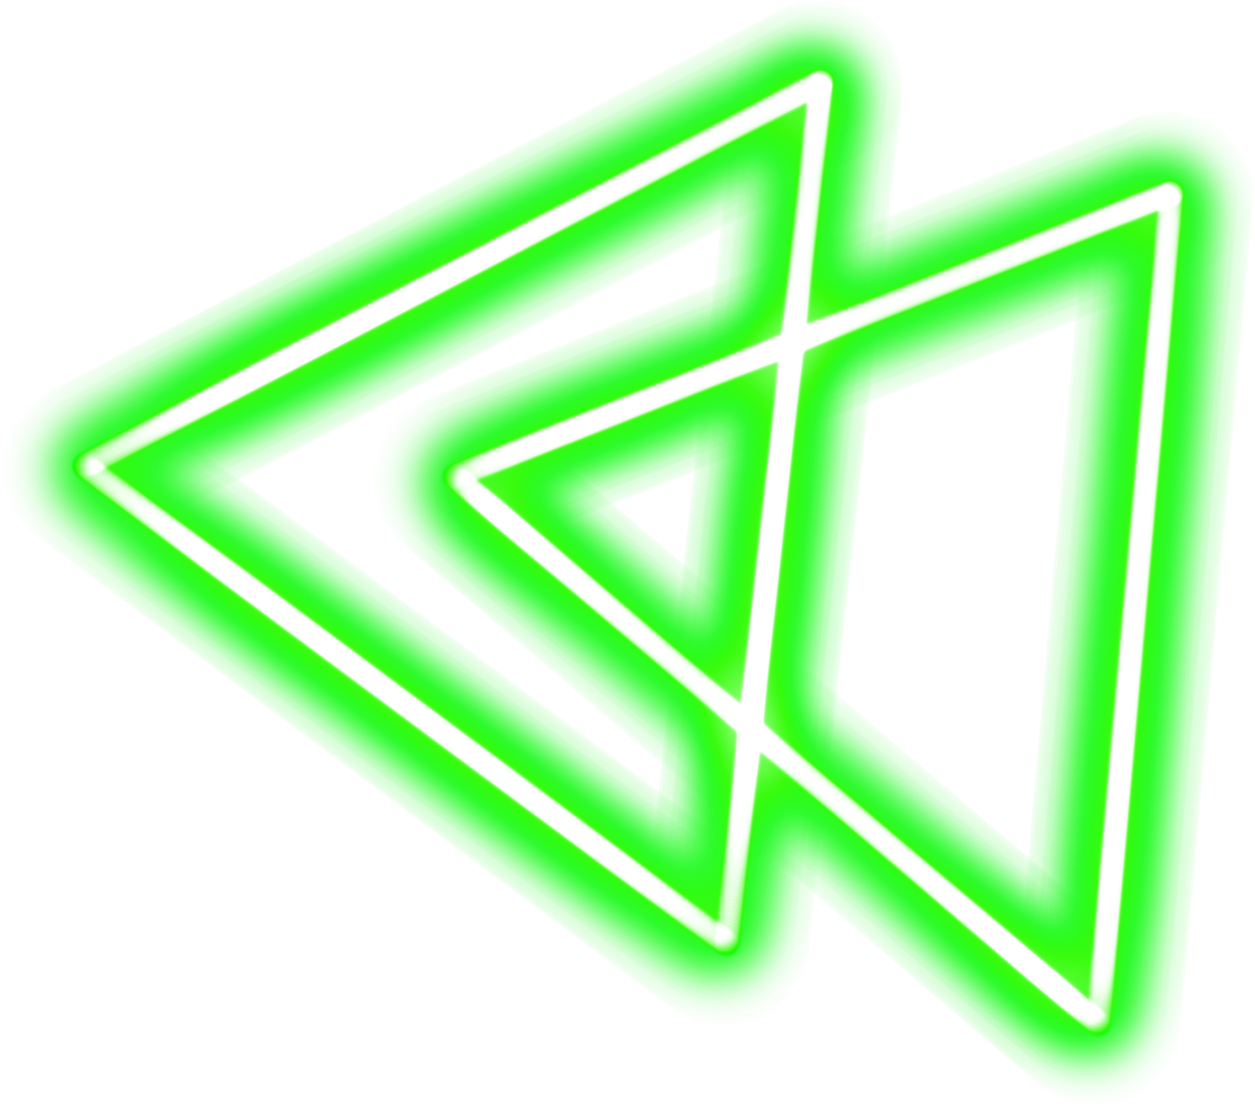 Green neon triangles